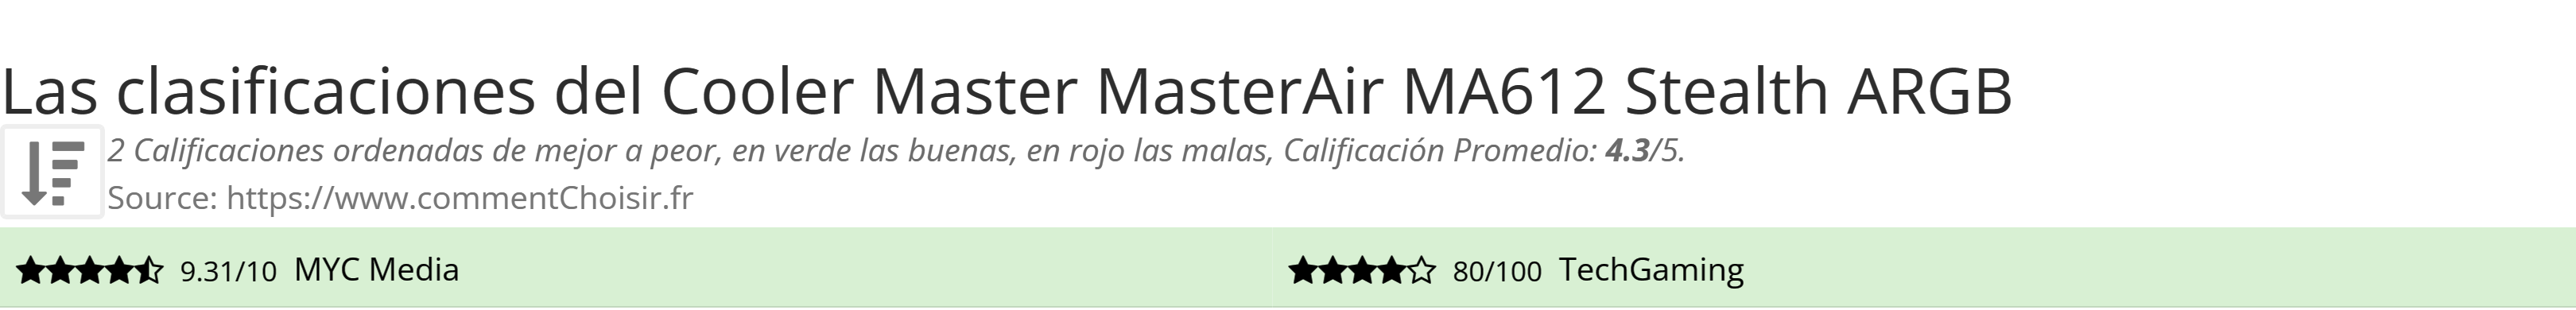 Ratings Cooler Master MasterAir MA612 Stealth ARGB